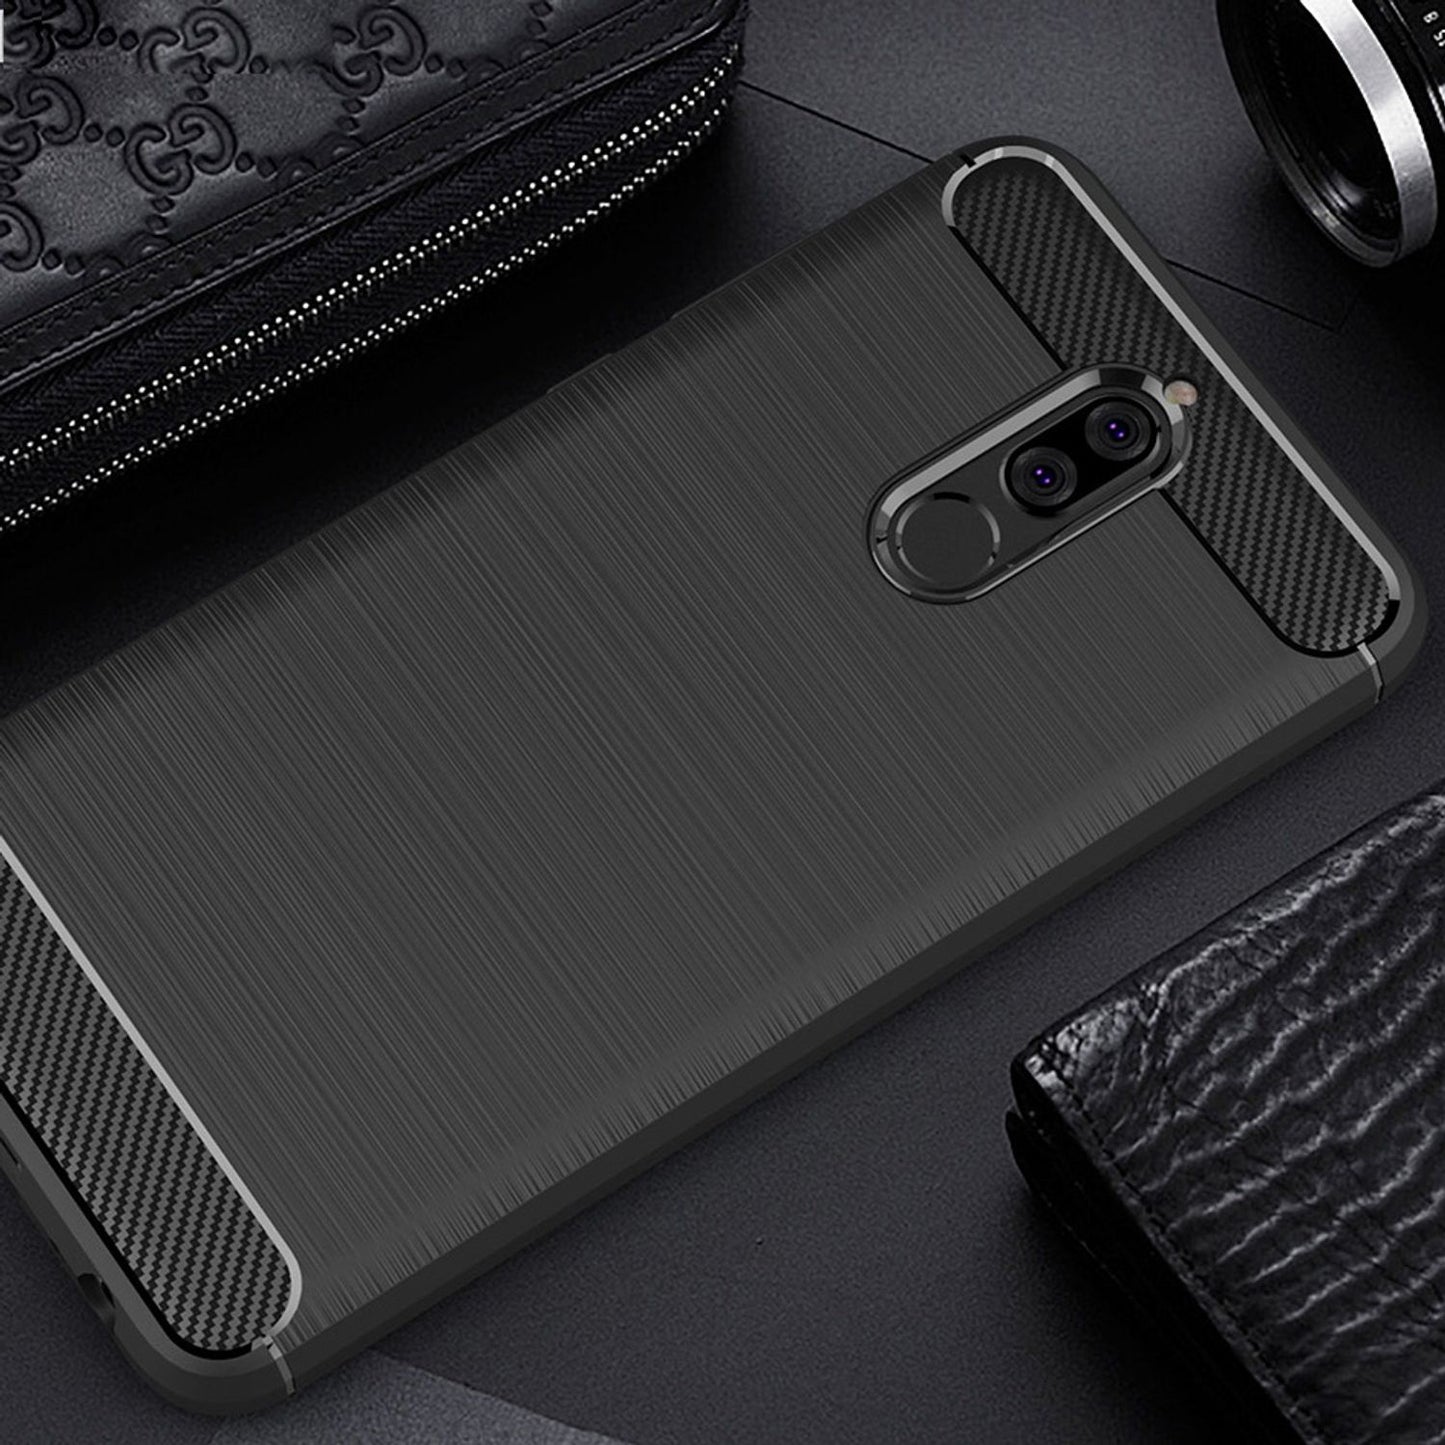 Huawei Mate 10 Lite Handy Hülle von NALIA, Carbon Look Silikon Cover Case Schutz